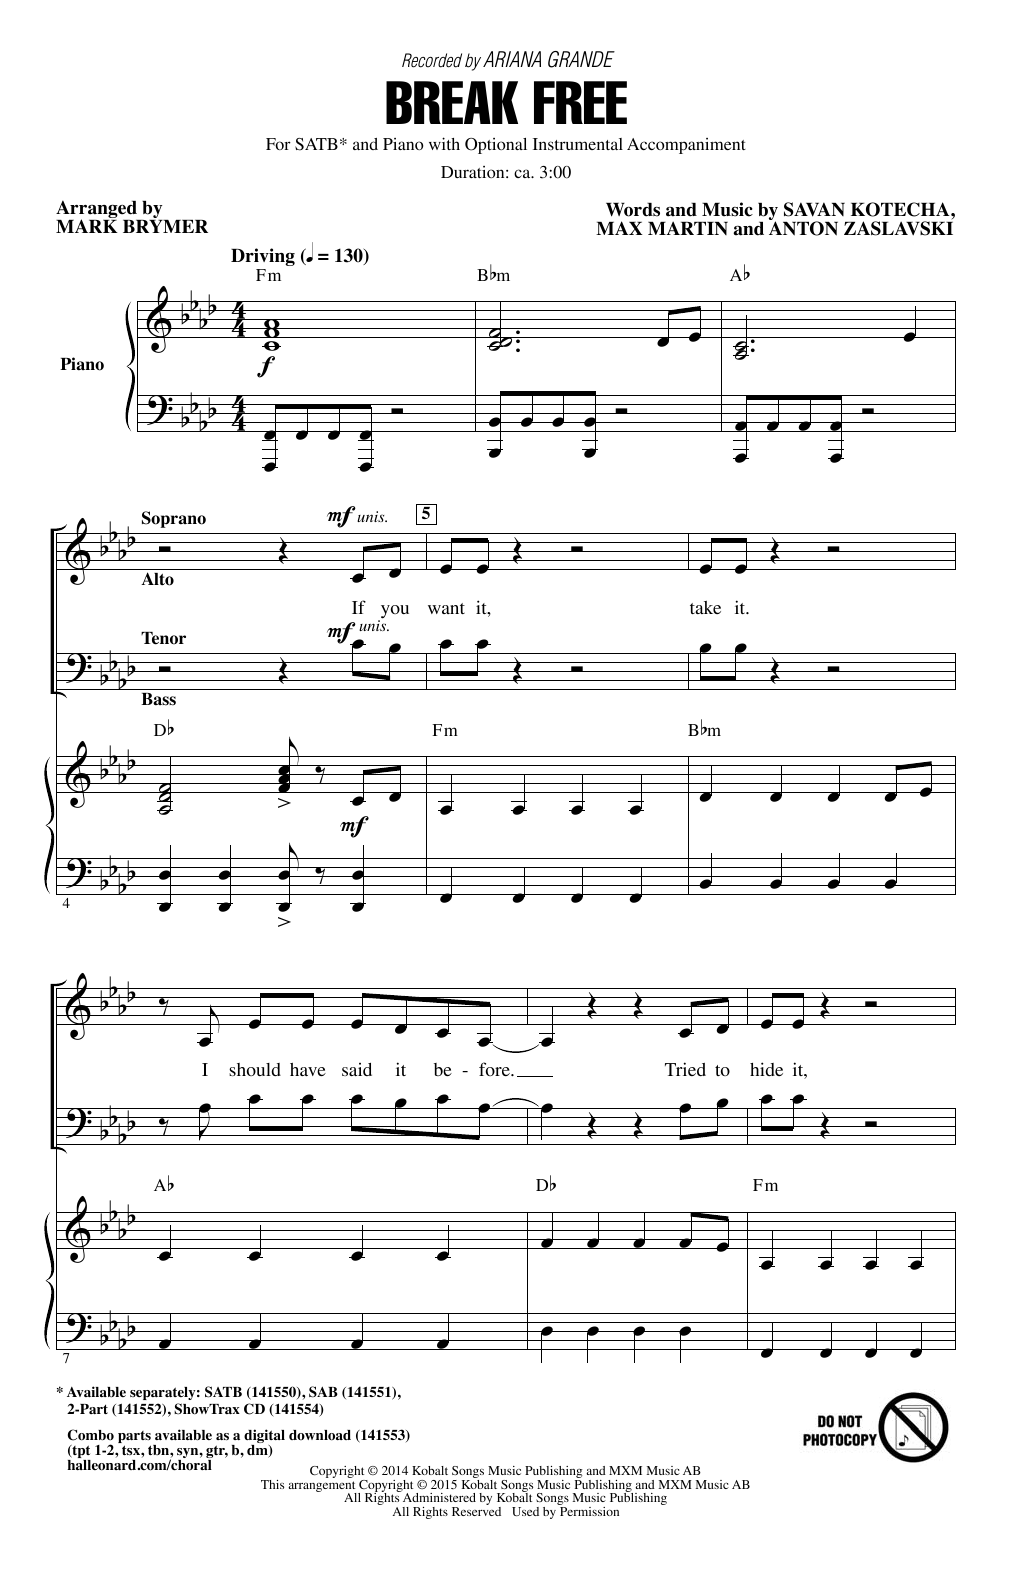 Ariana Grande Break Free (feat. Zedd) (arr. Mark Brymer) Sheet Music Notes & Chords for SATB - Download or Print PDF